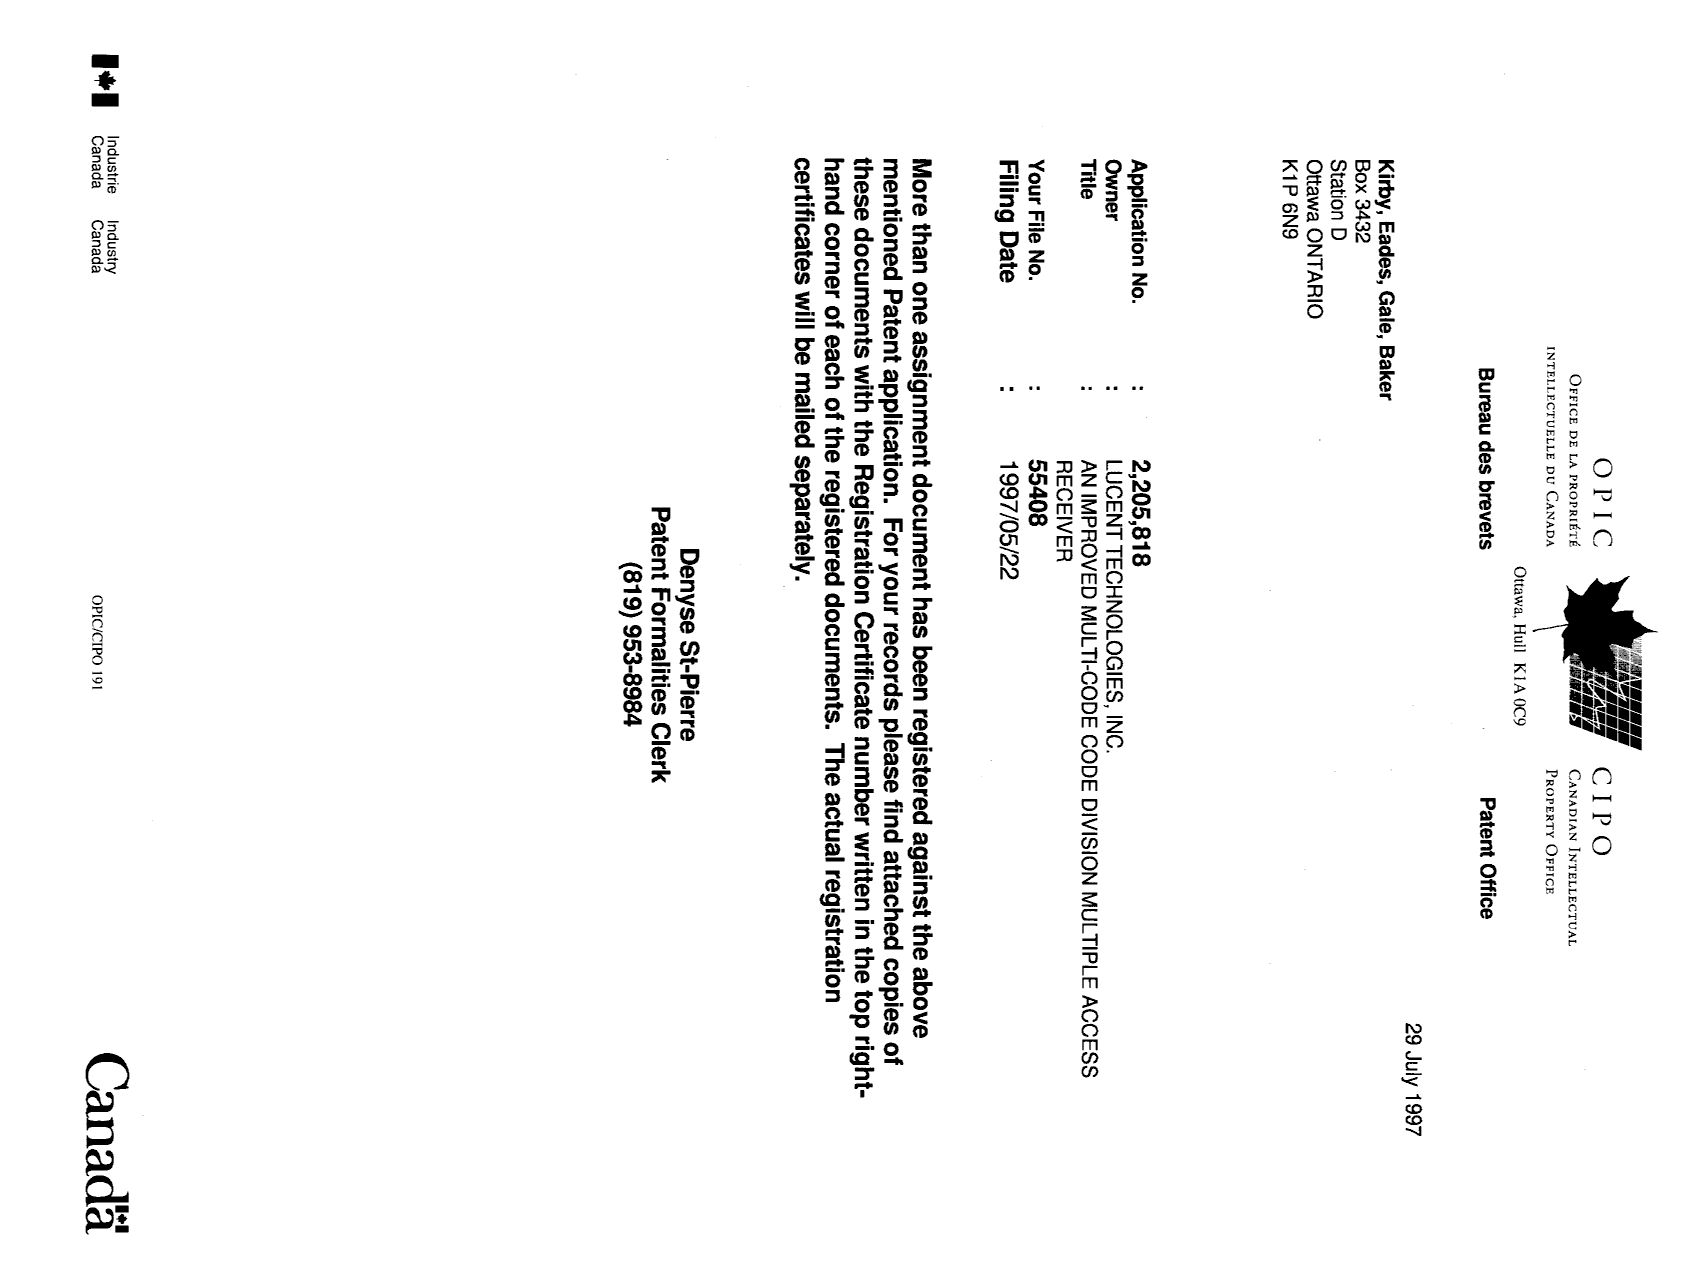 Canadian Patent Document 2205818. Correspondence 19961229. Image 1 of 1